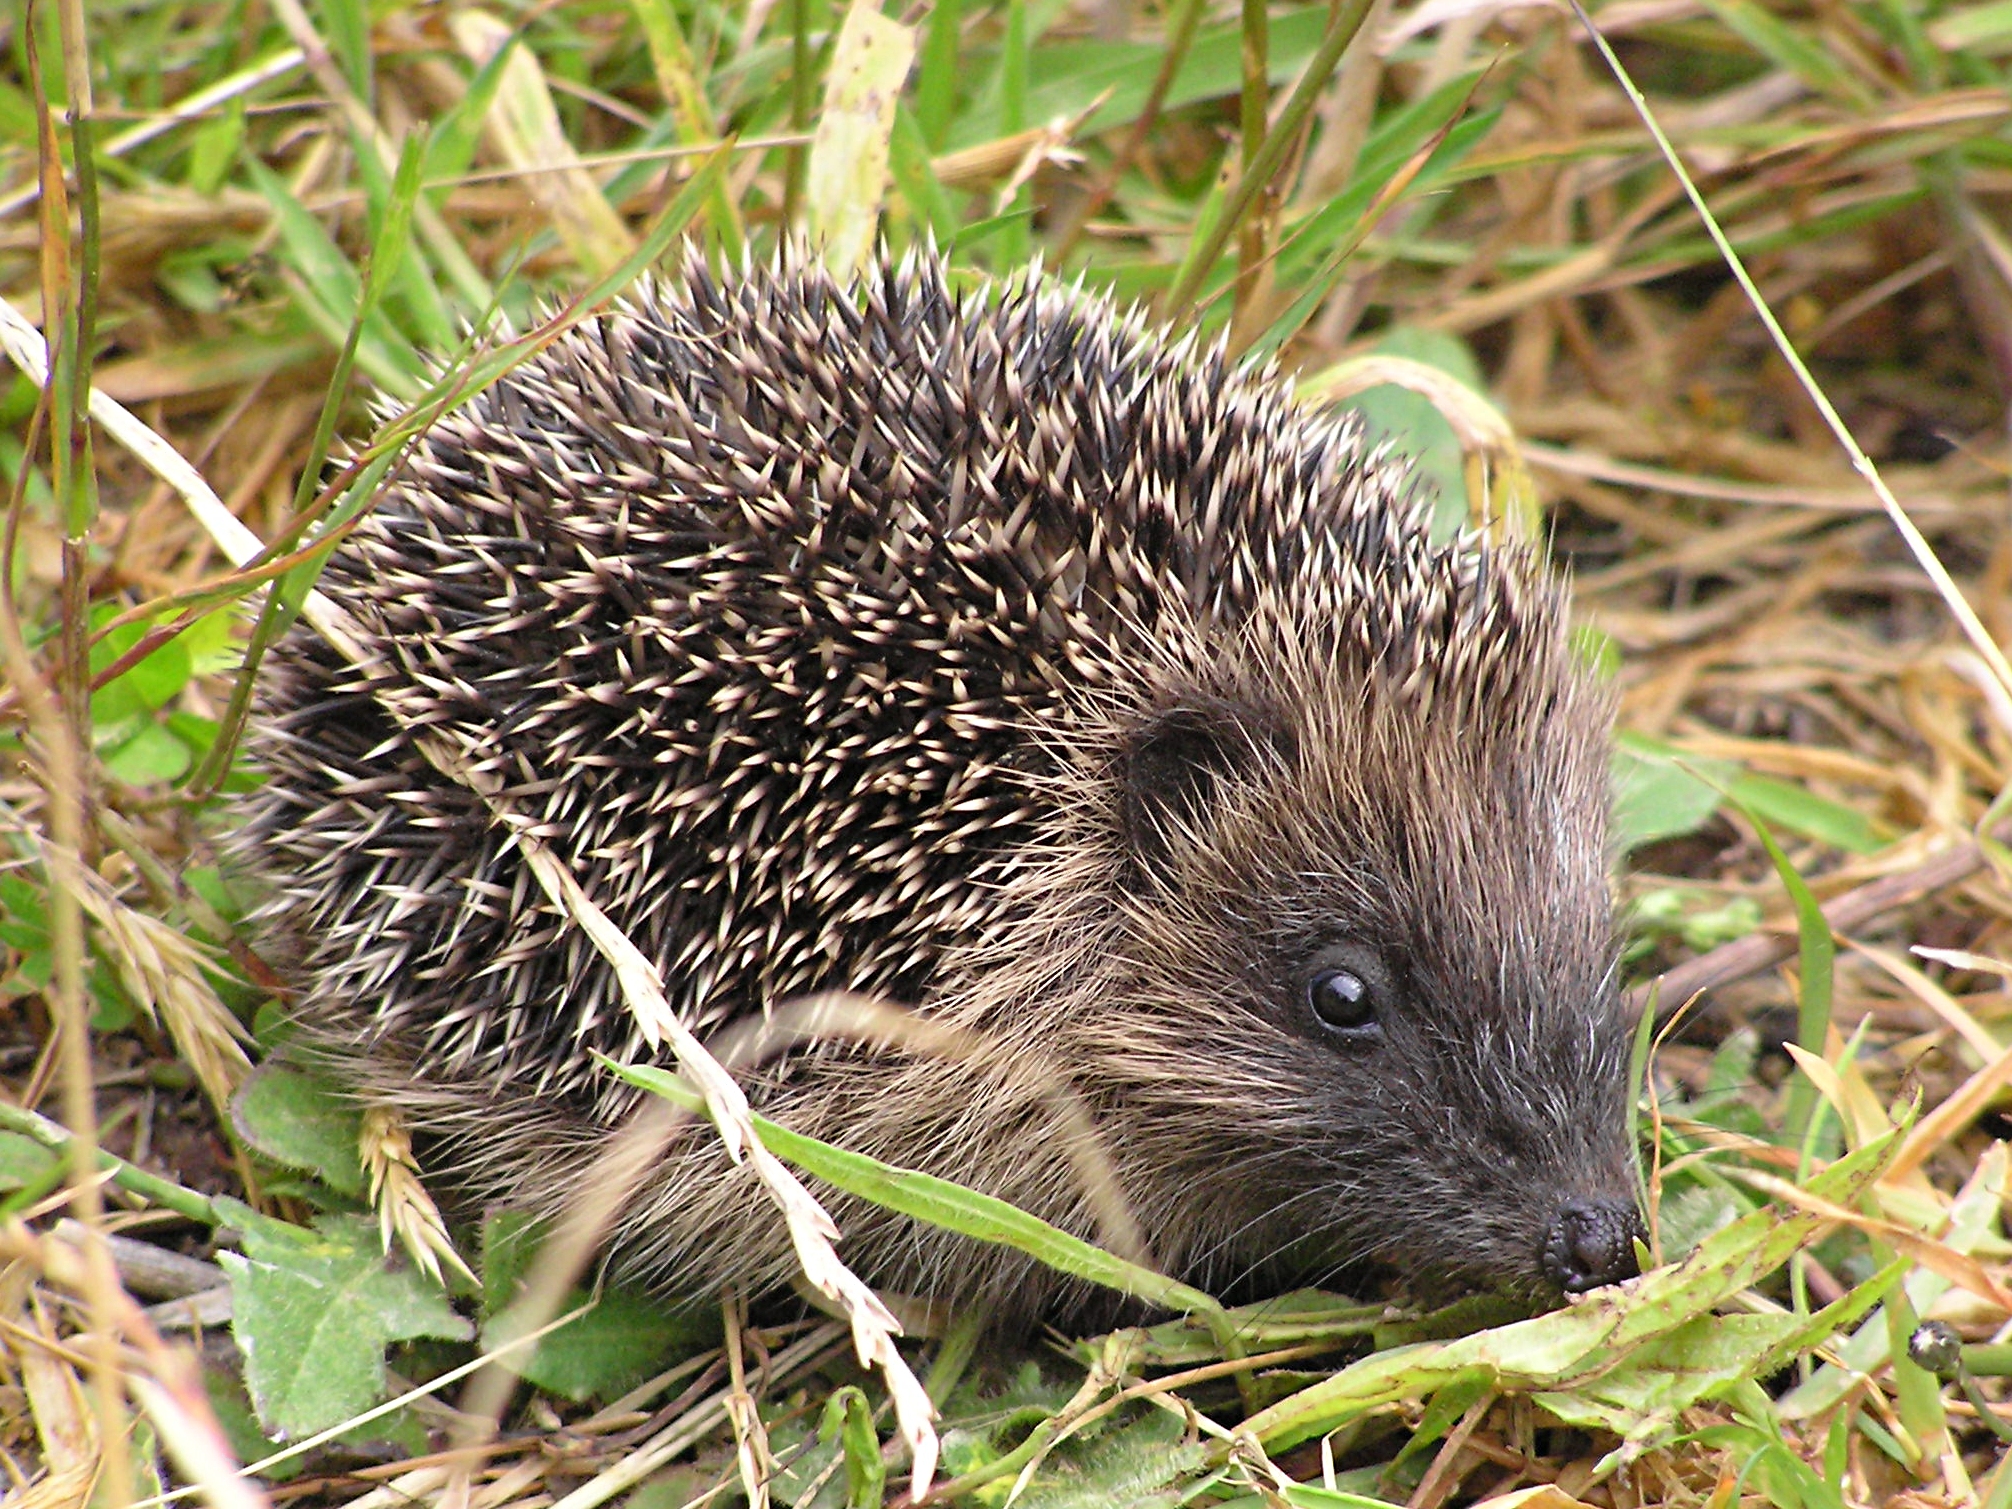 The Hedgehog Is Britain’s New National Emblem | Smart News ...